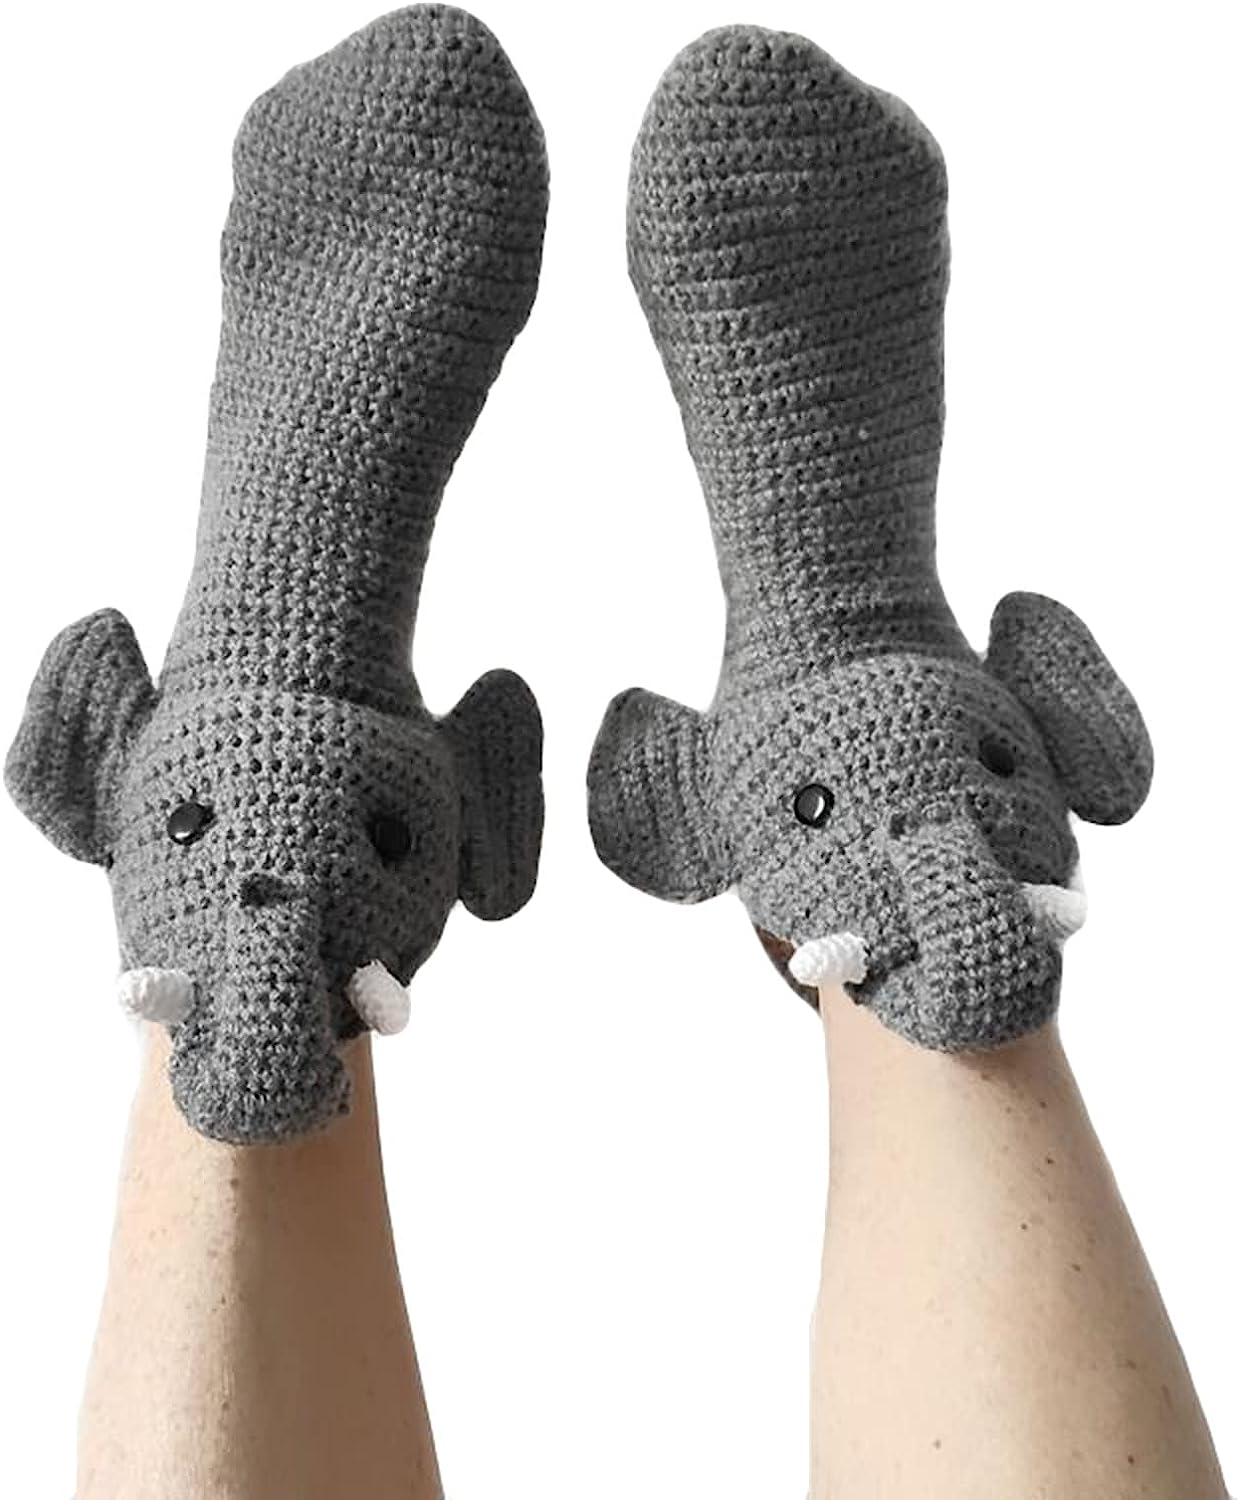 THATLILSHOP One Size / Elephant Women Men Novelty Animal Pattern Socks Crazy Funny Knit Crocodile Socks Funny Gifts